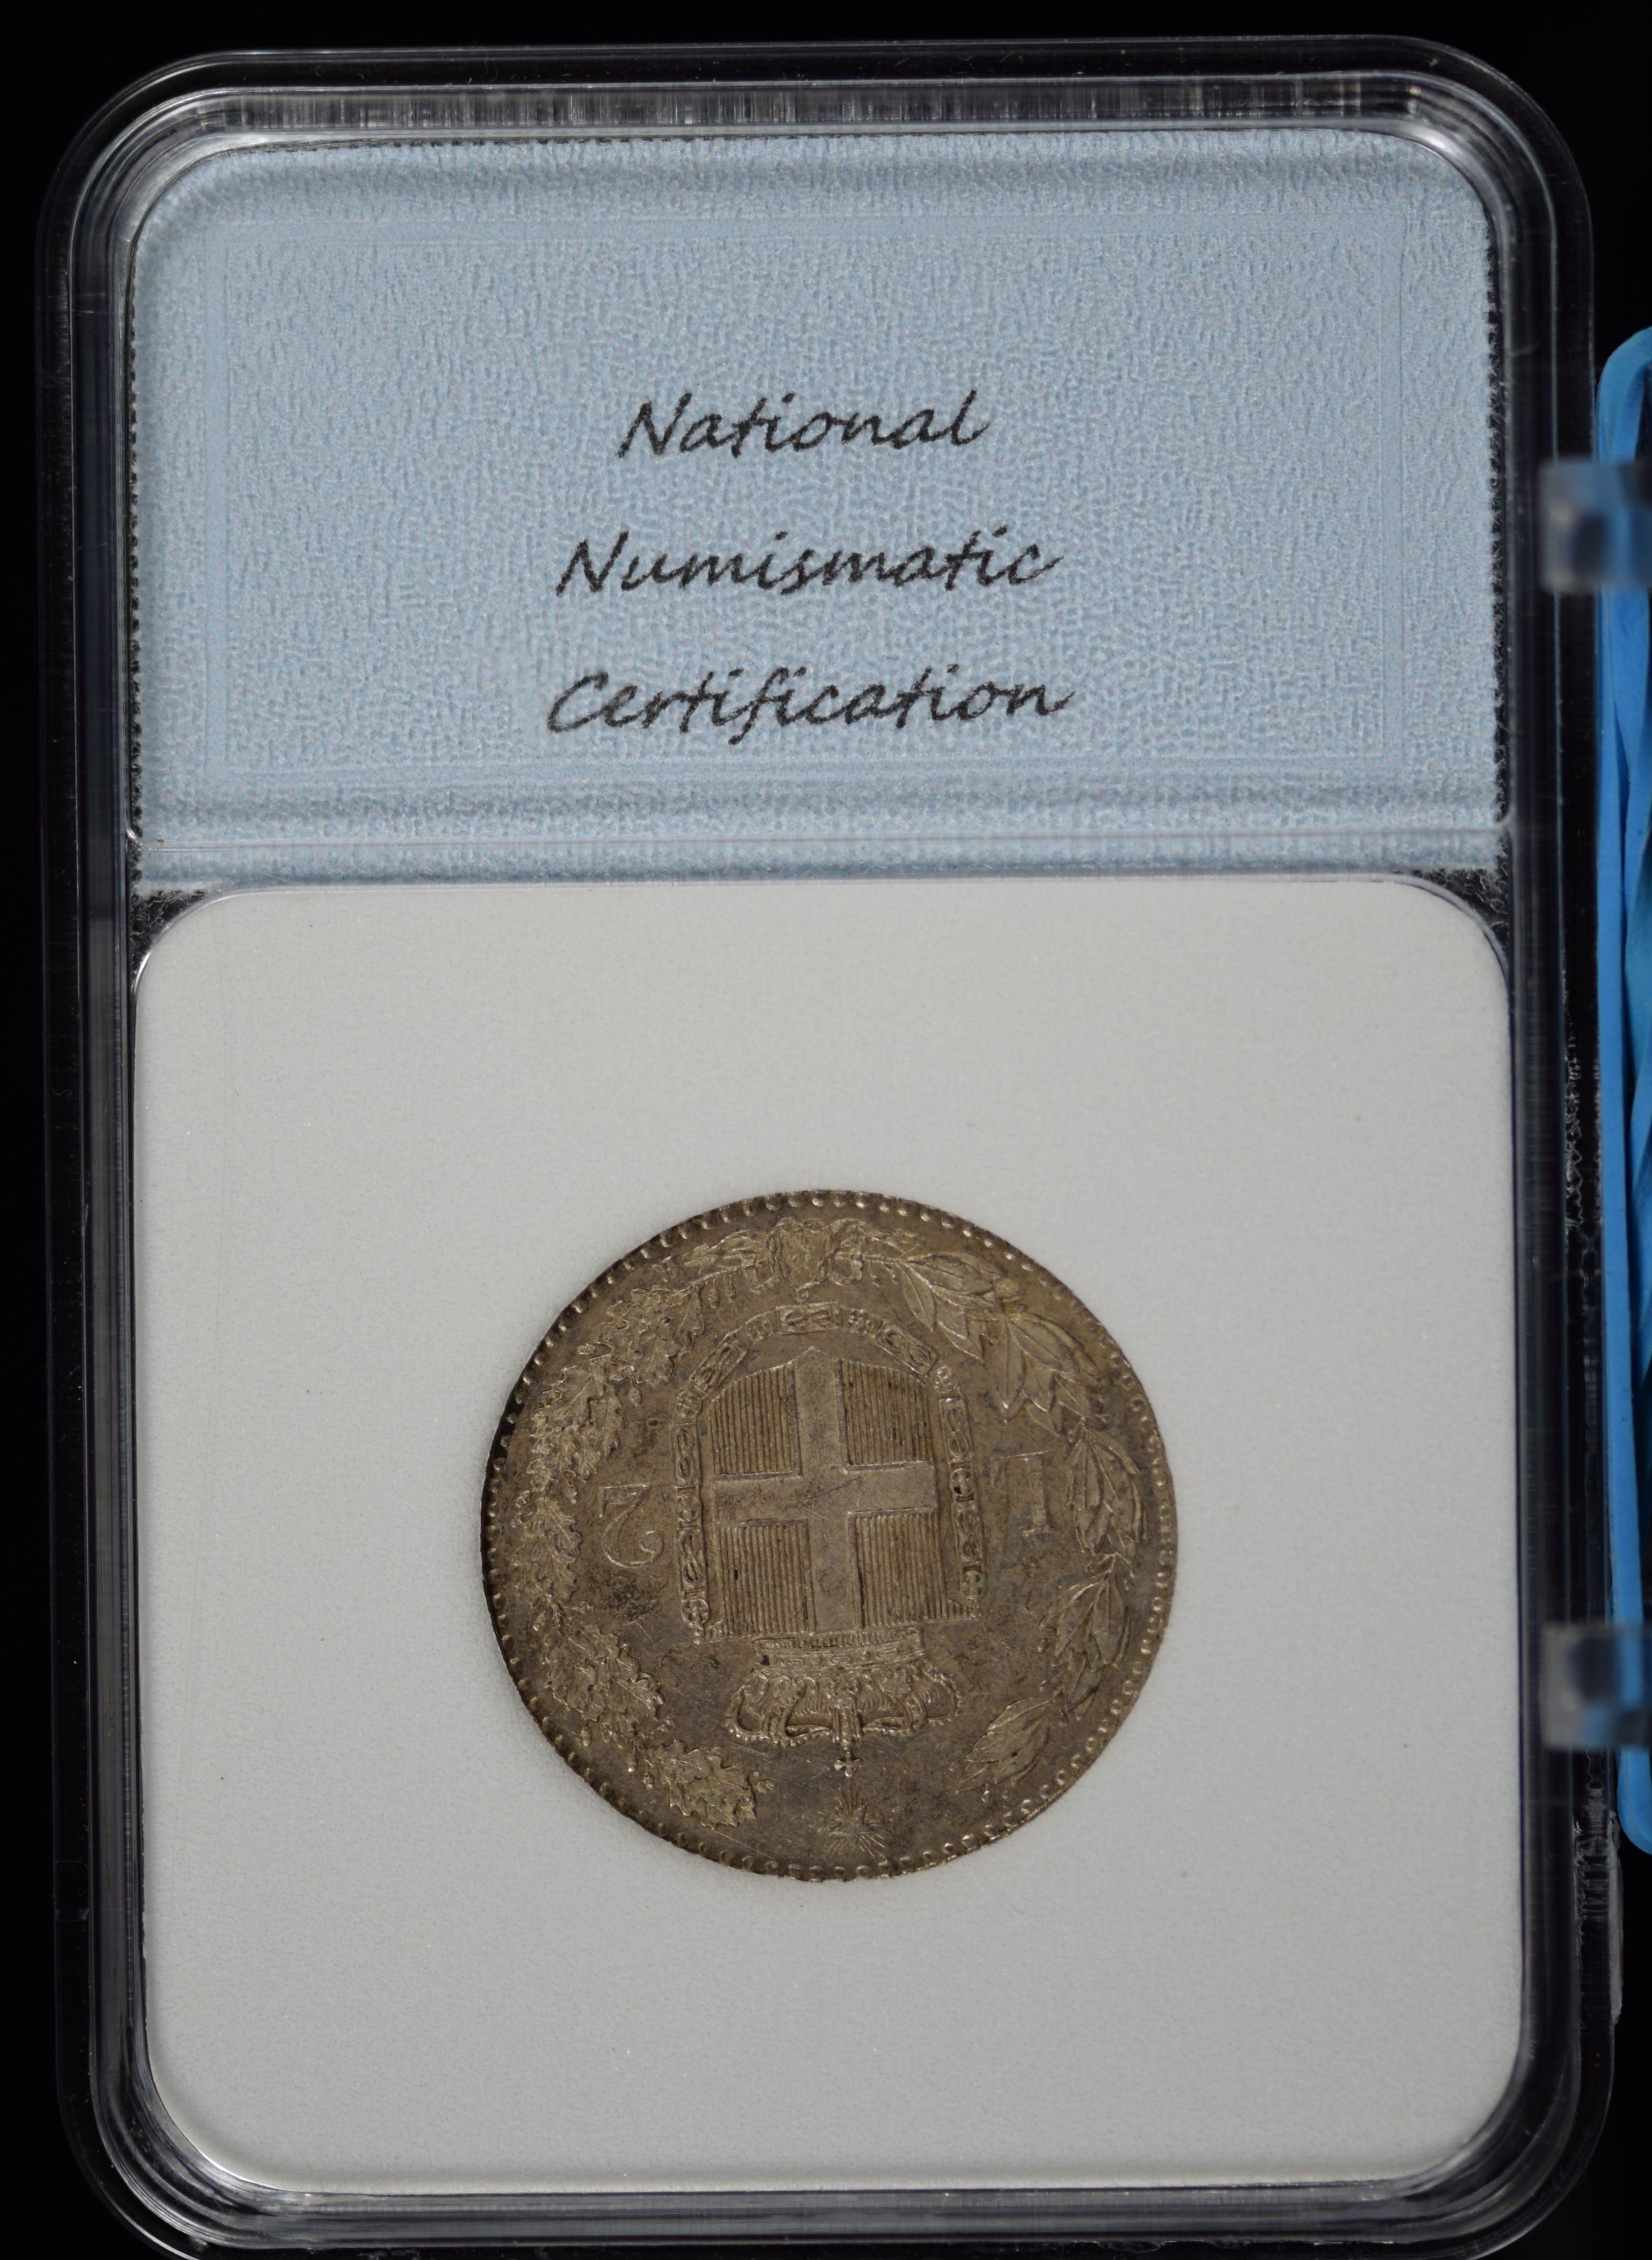 1886 Silver 2 Lira Italy NNC UNC Very Scarce